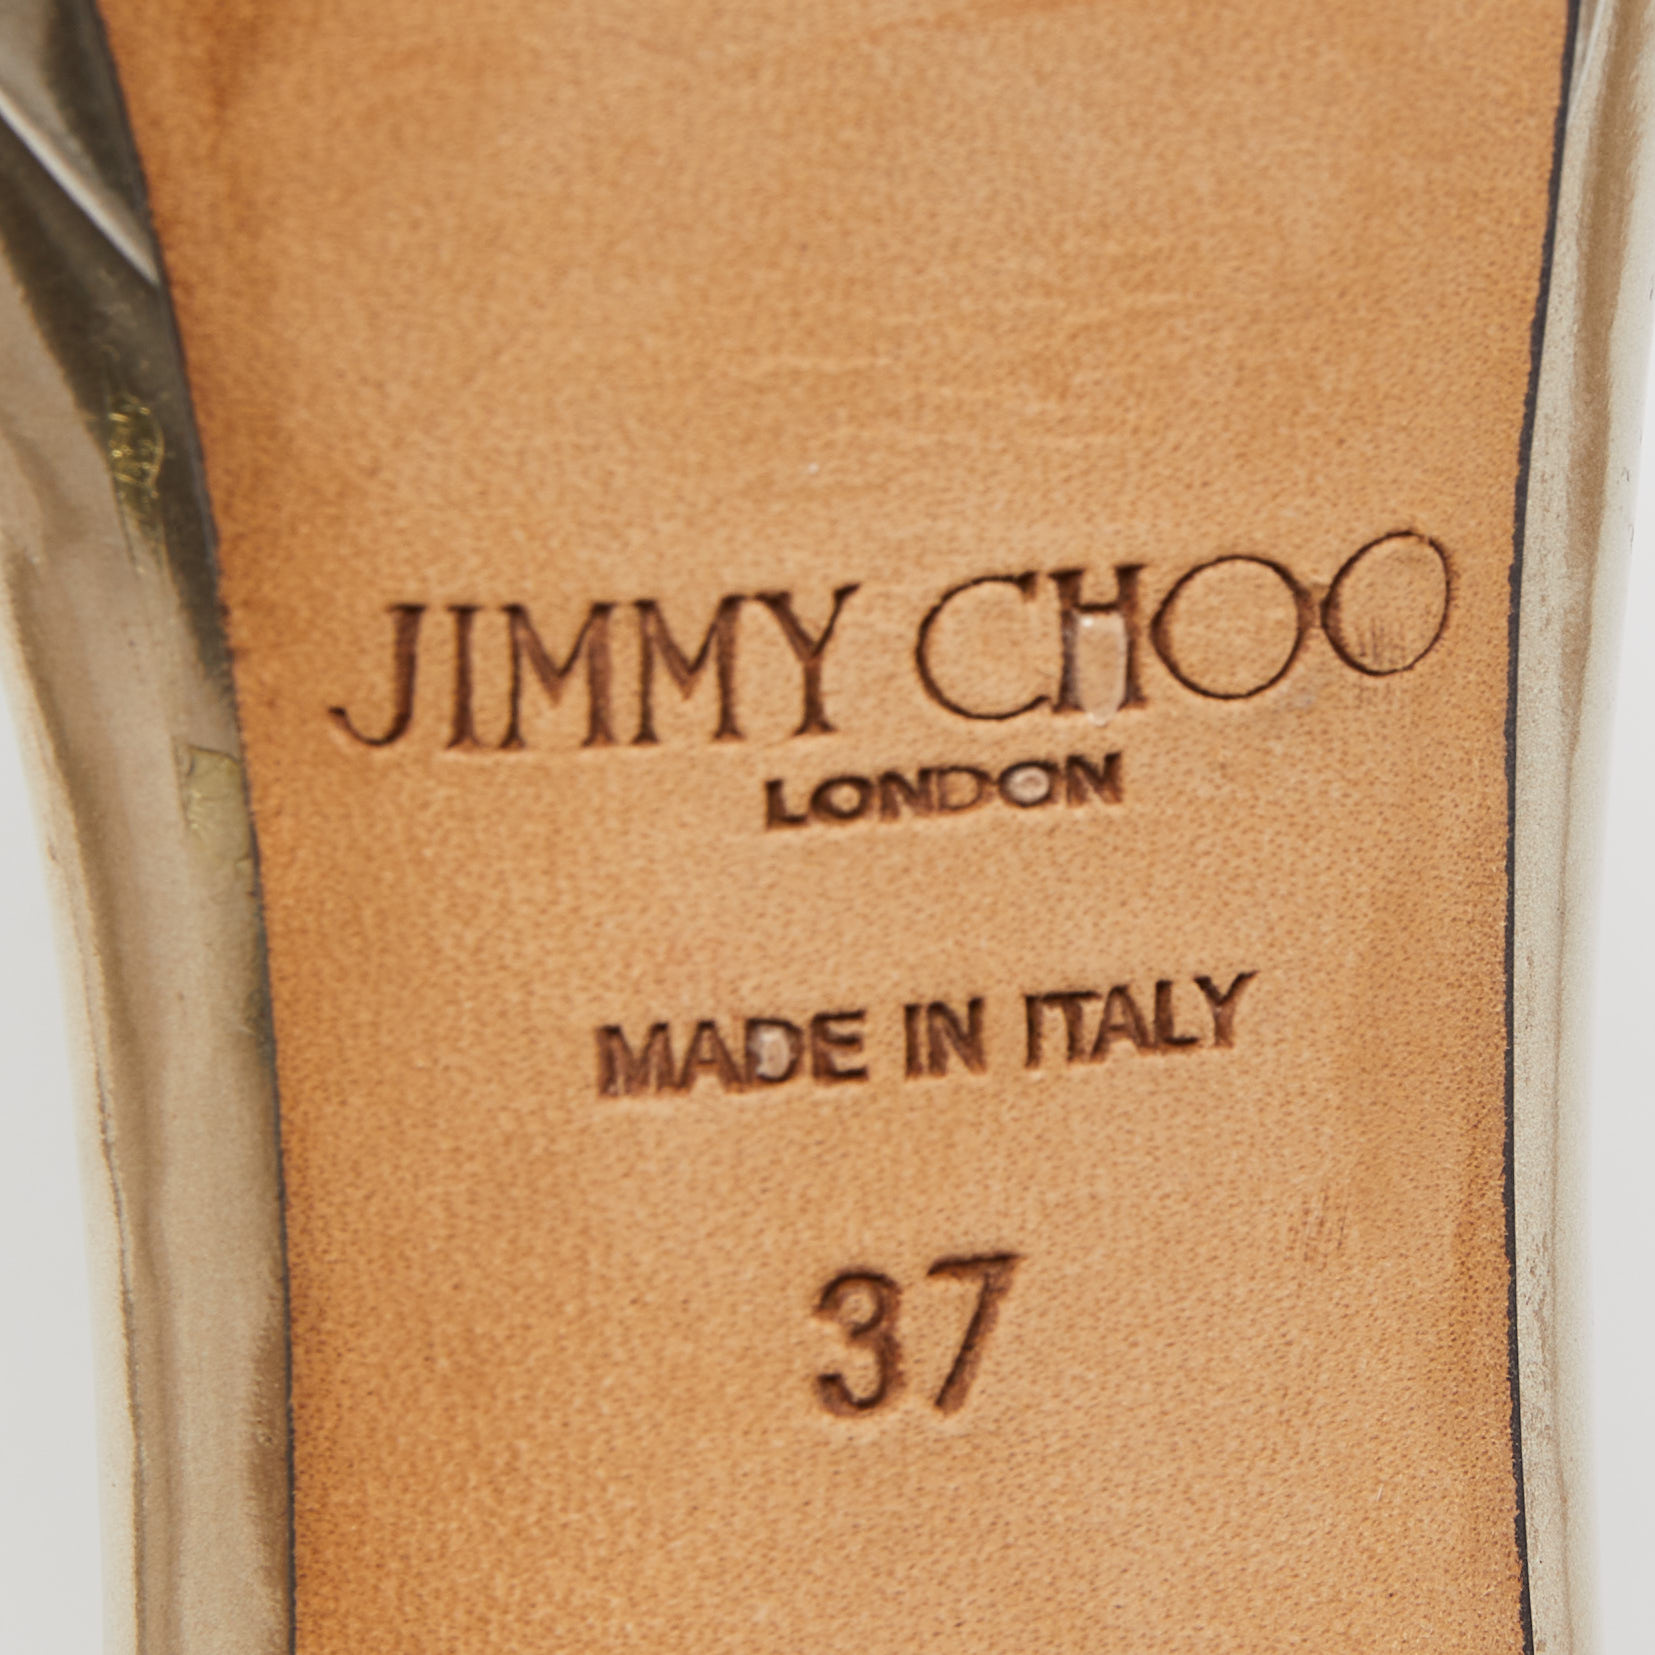 Jimmy Choo Gold Leather Misty Ankle Strap Sandals Size 37